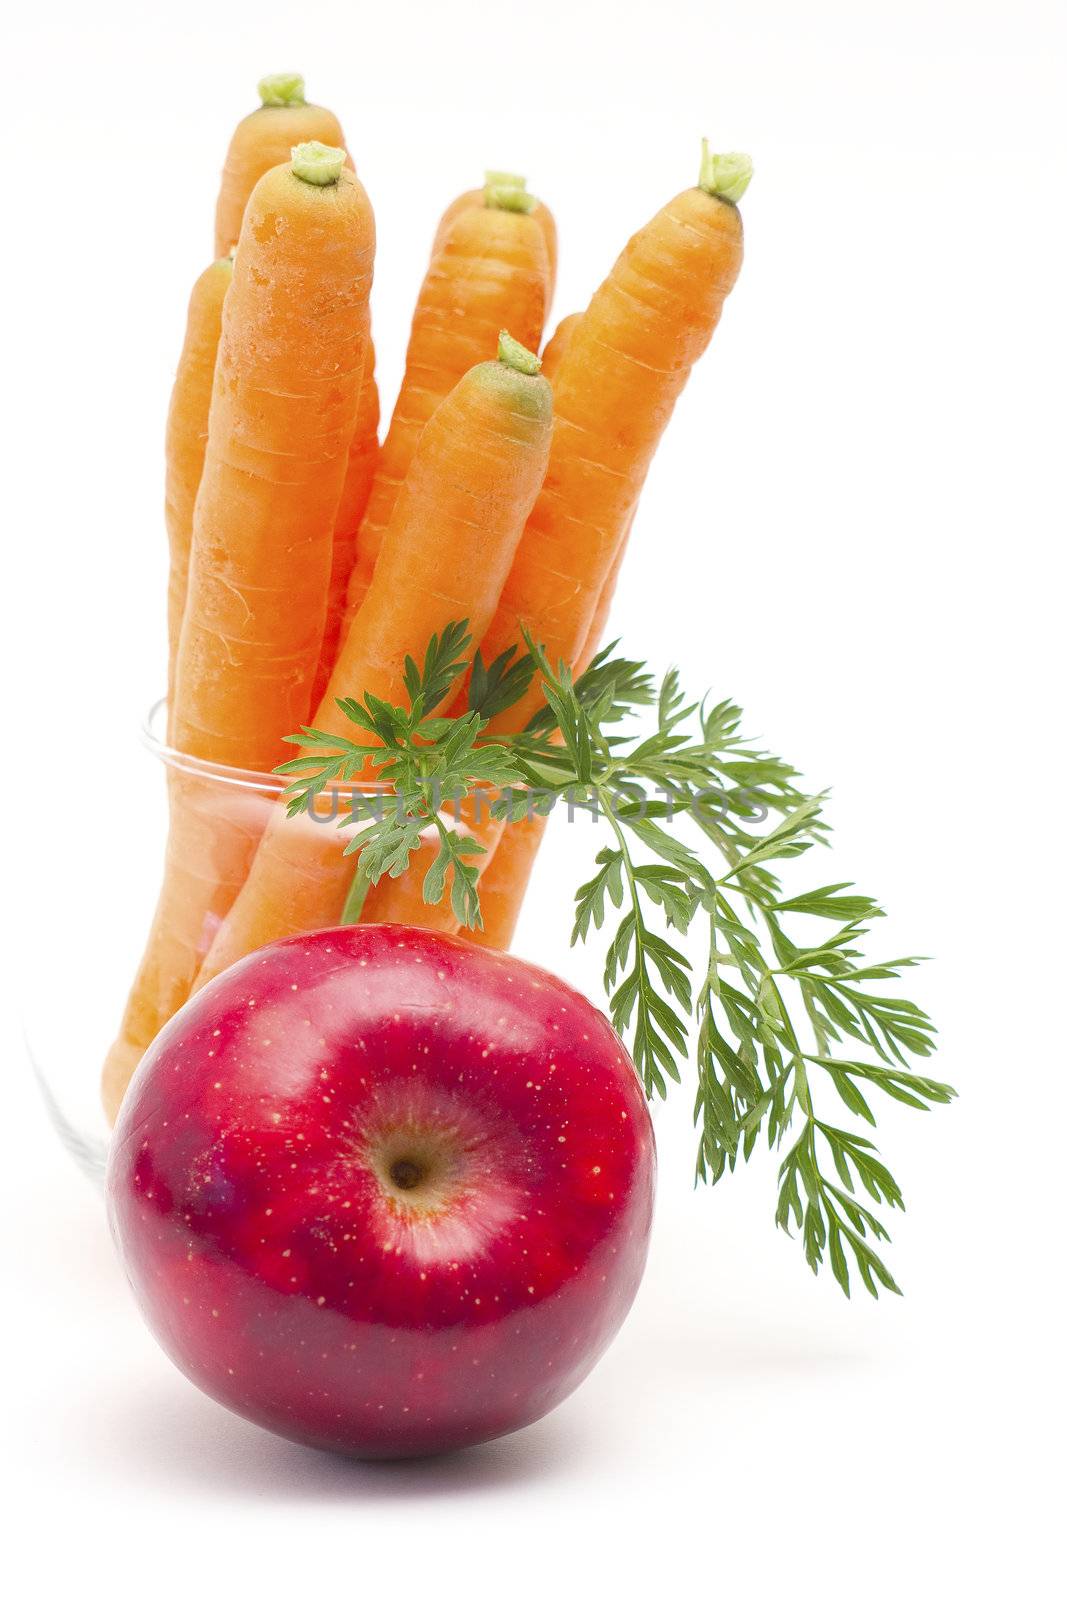 fresh apple and carrots by miradrozdowski